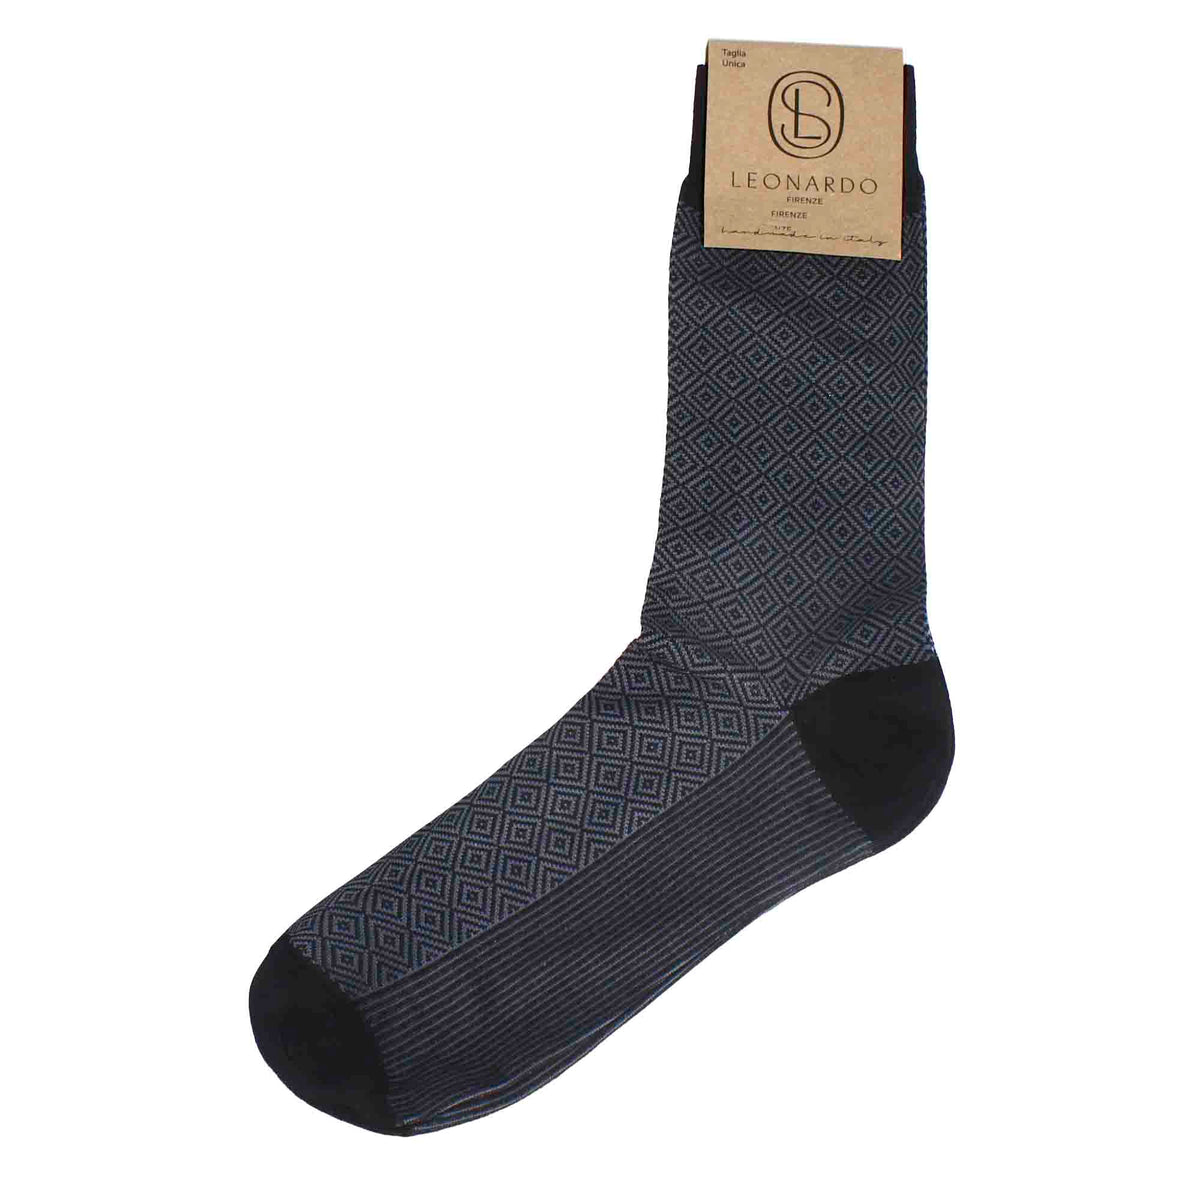 Men's grey cotton socks with black pattern